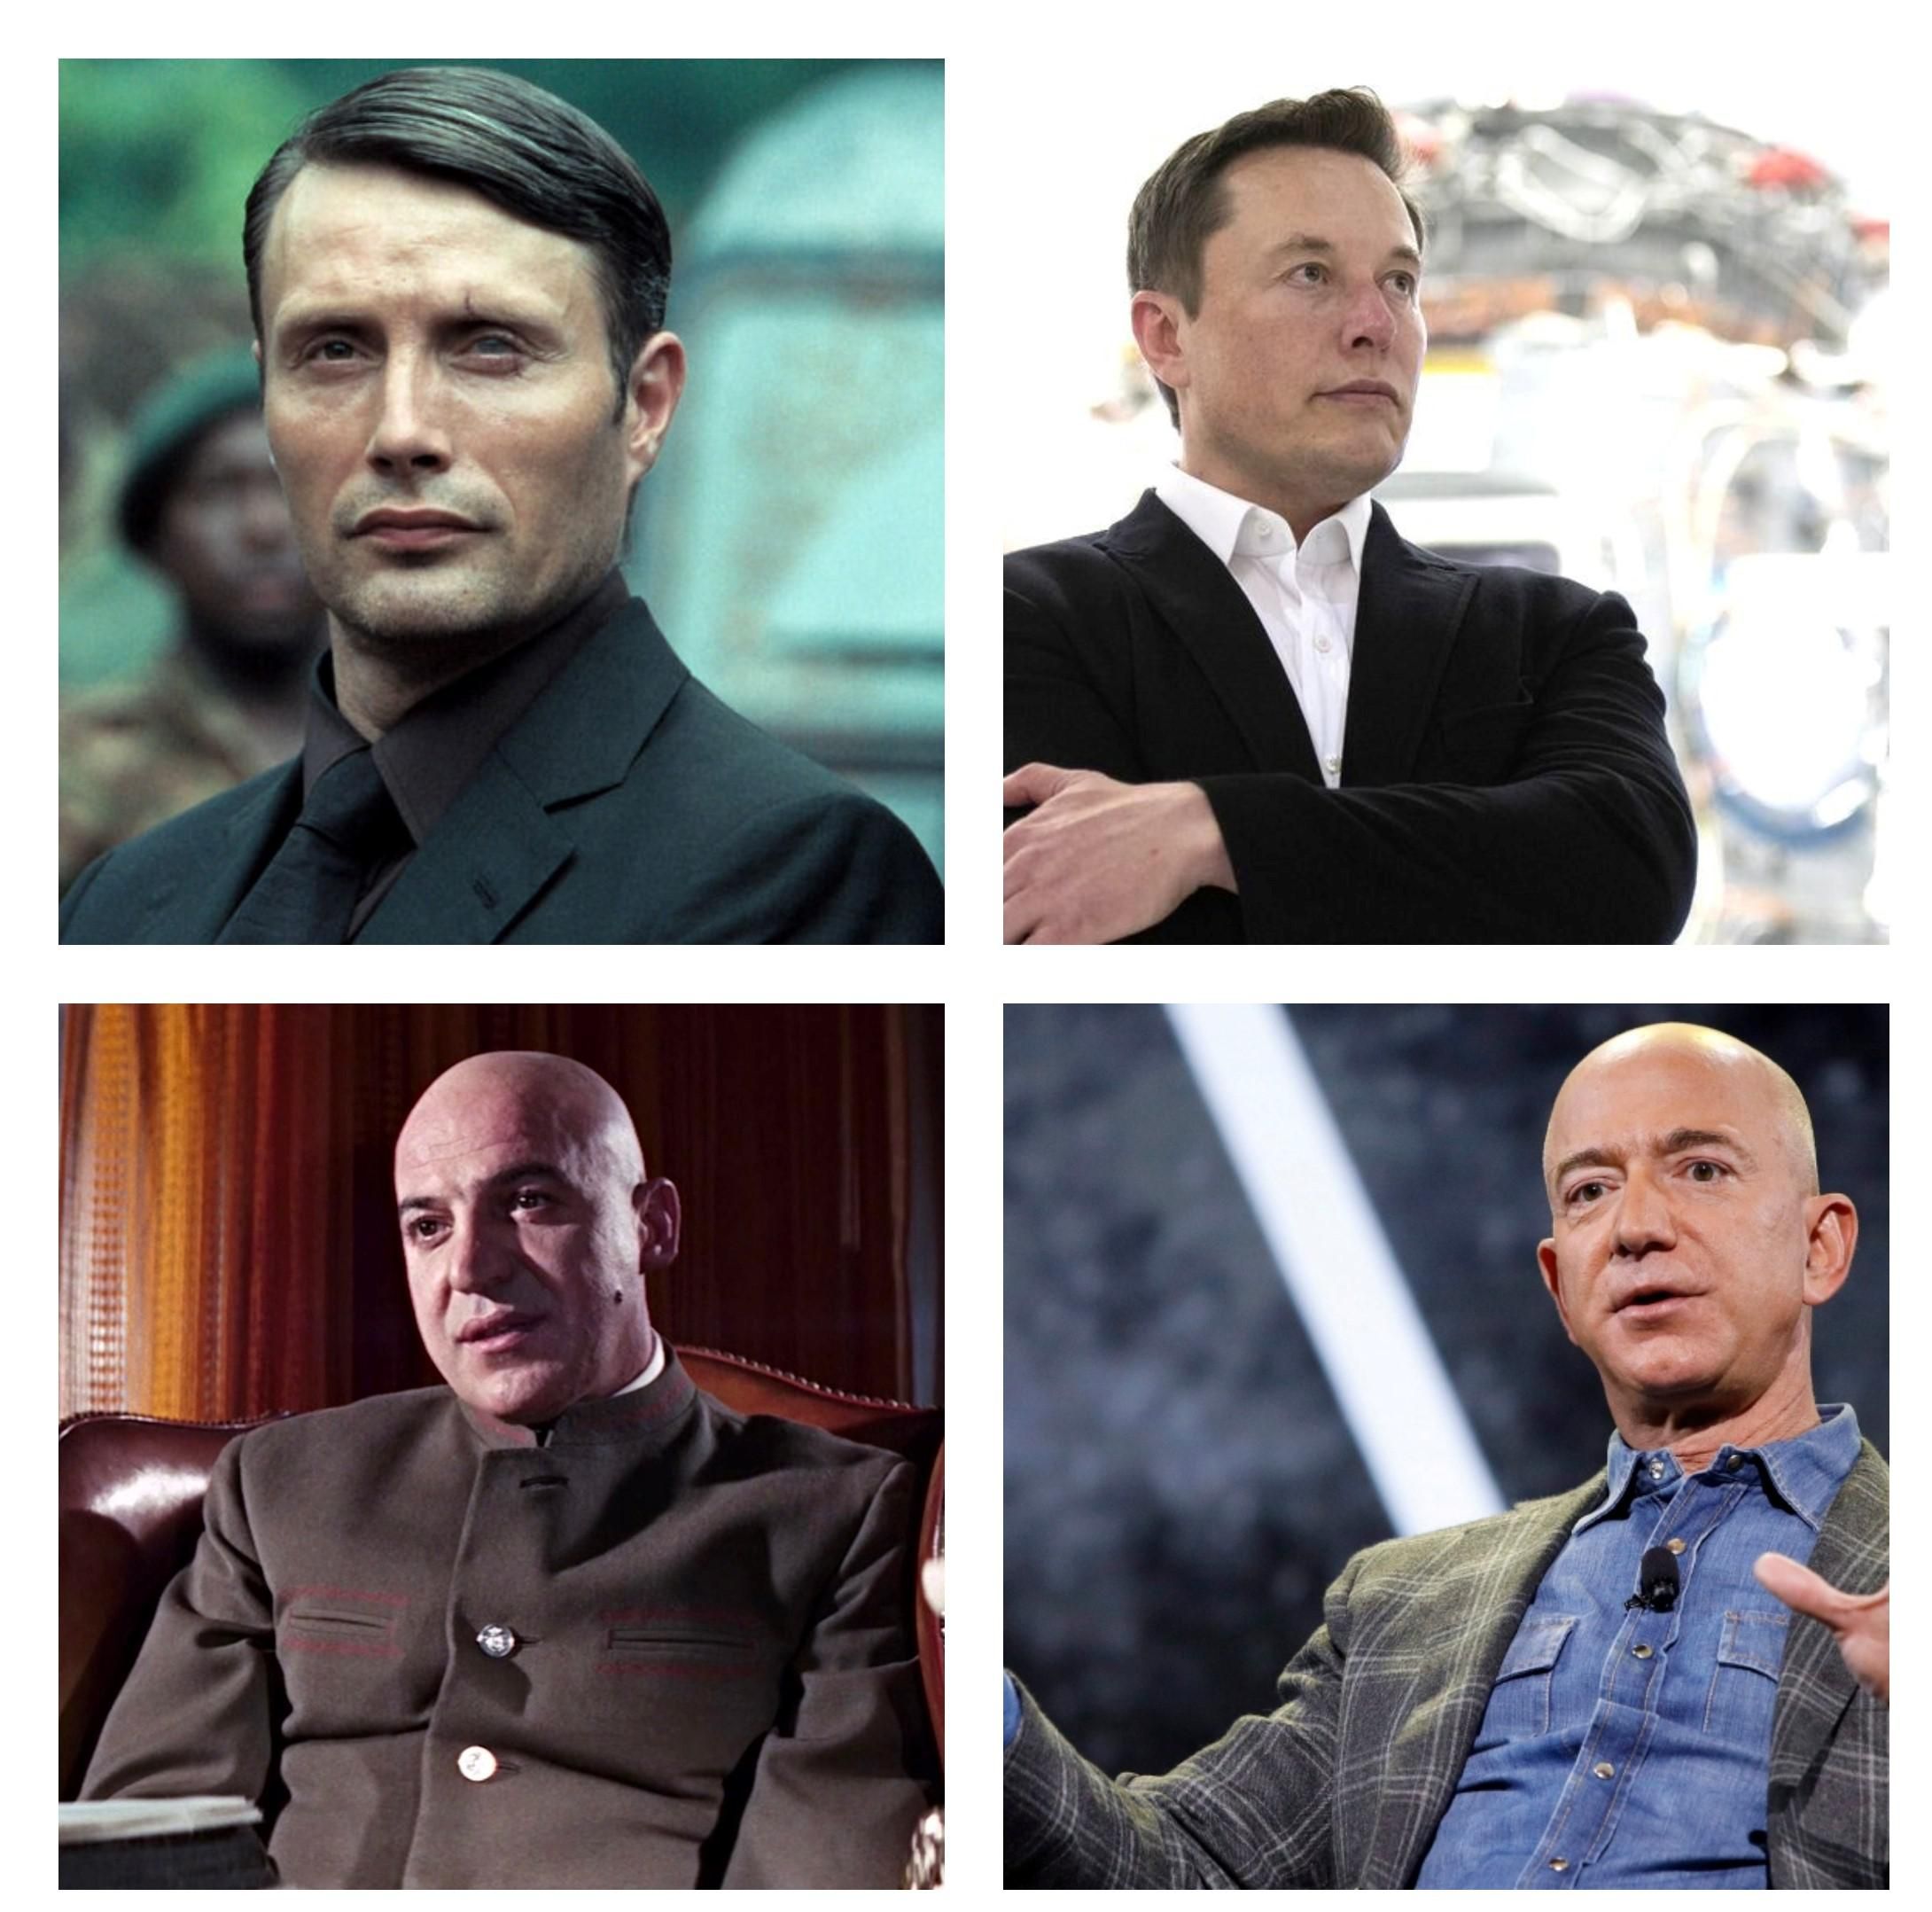 Who makes the best Bond Villain?